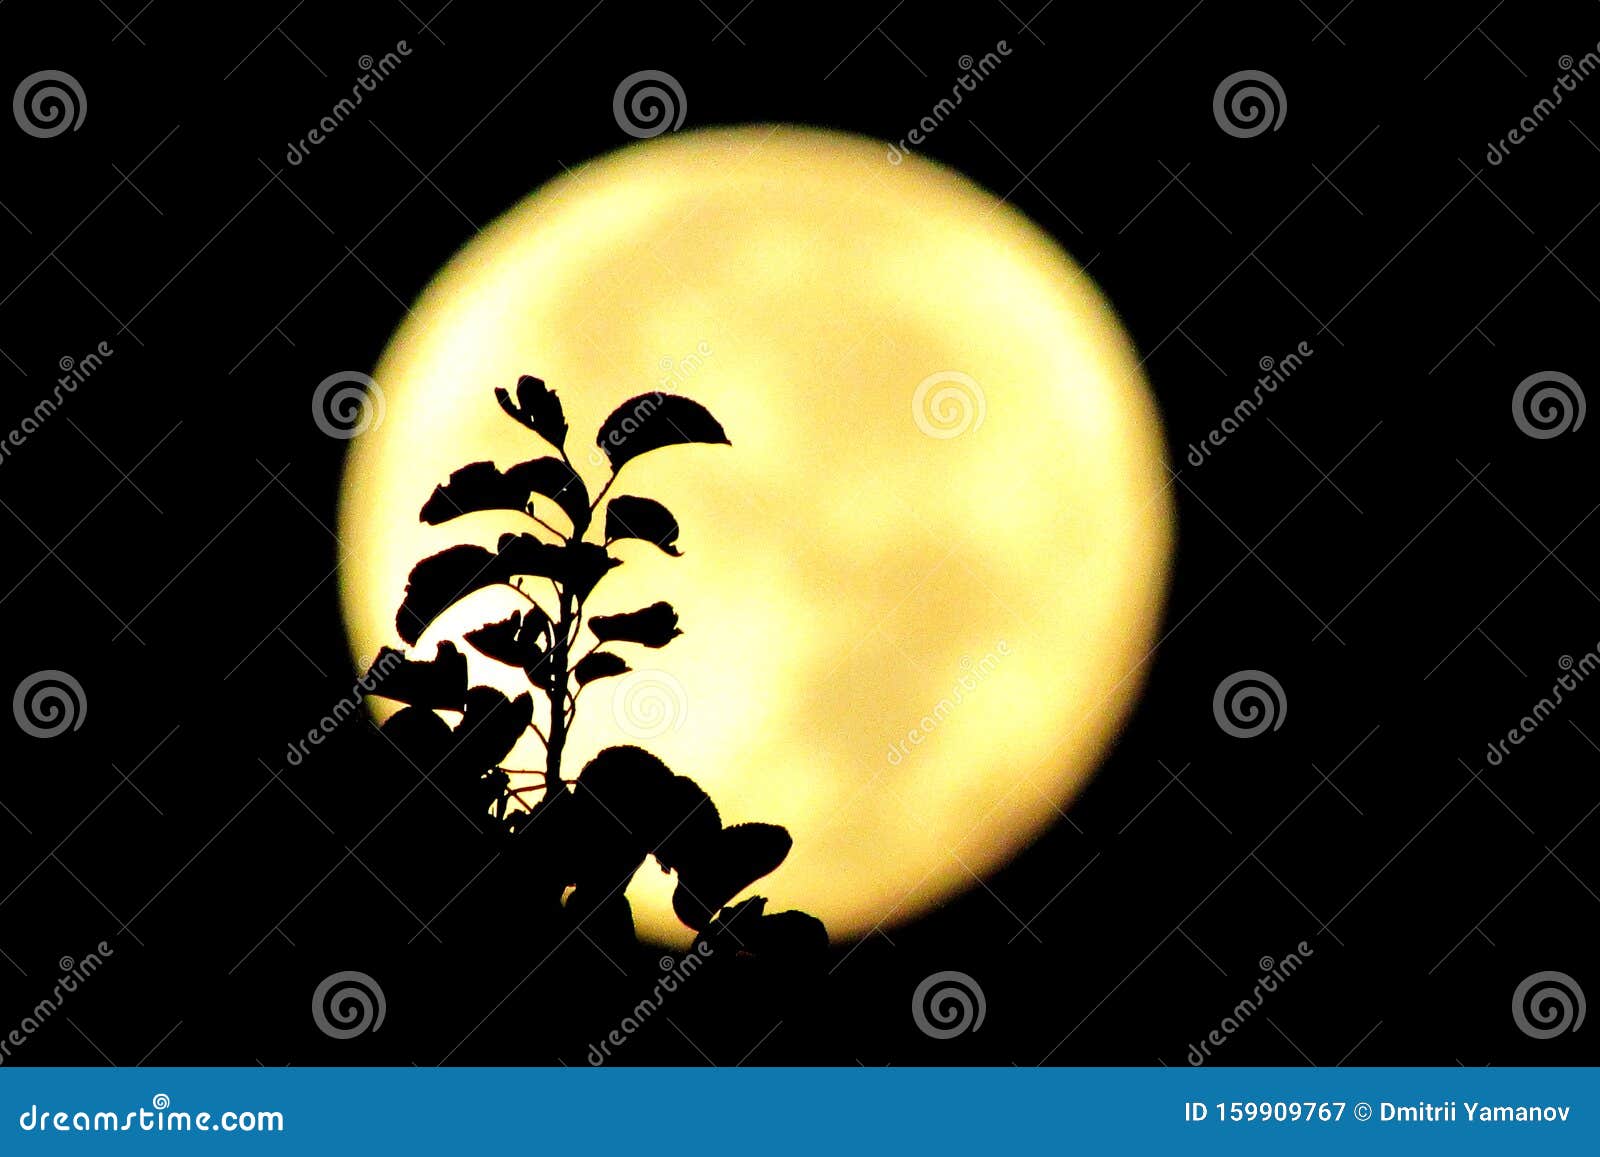 Moon Full Moon Night Sky Night Landscape Stock Image Image Of